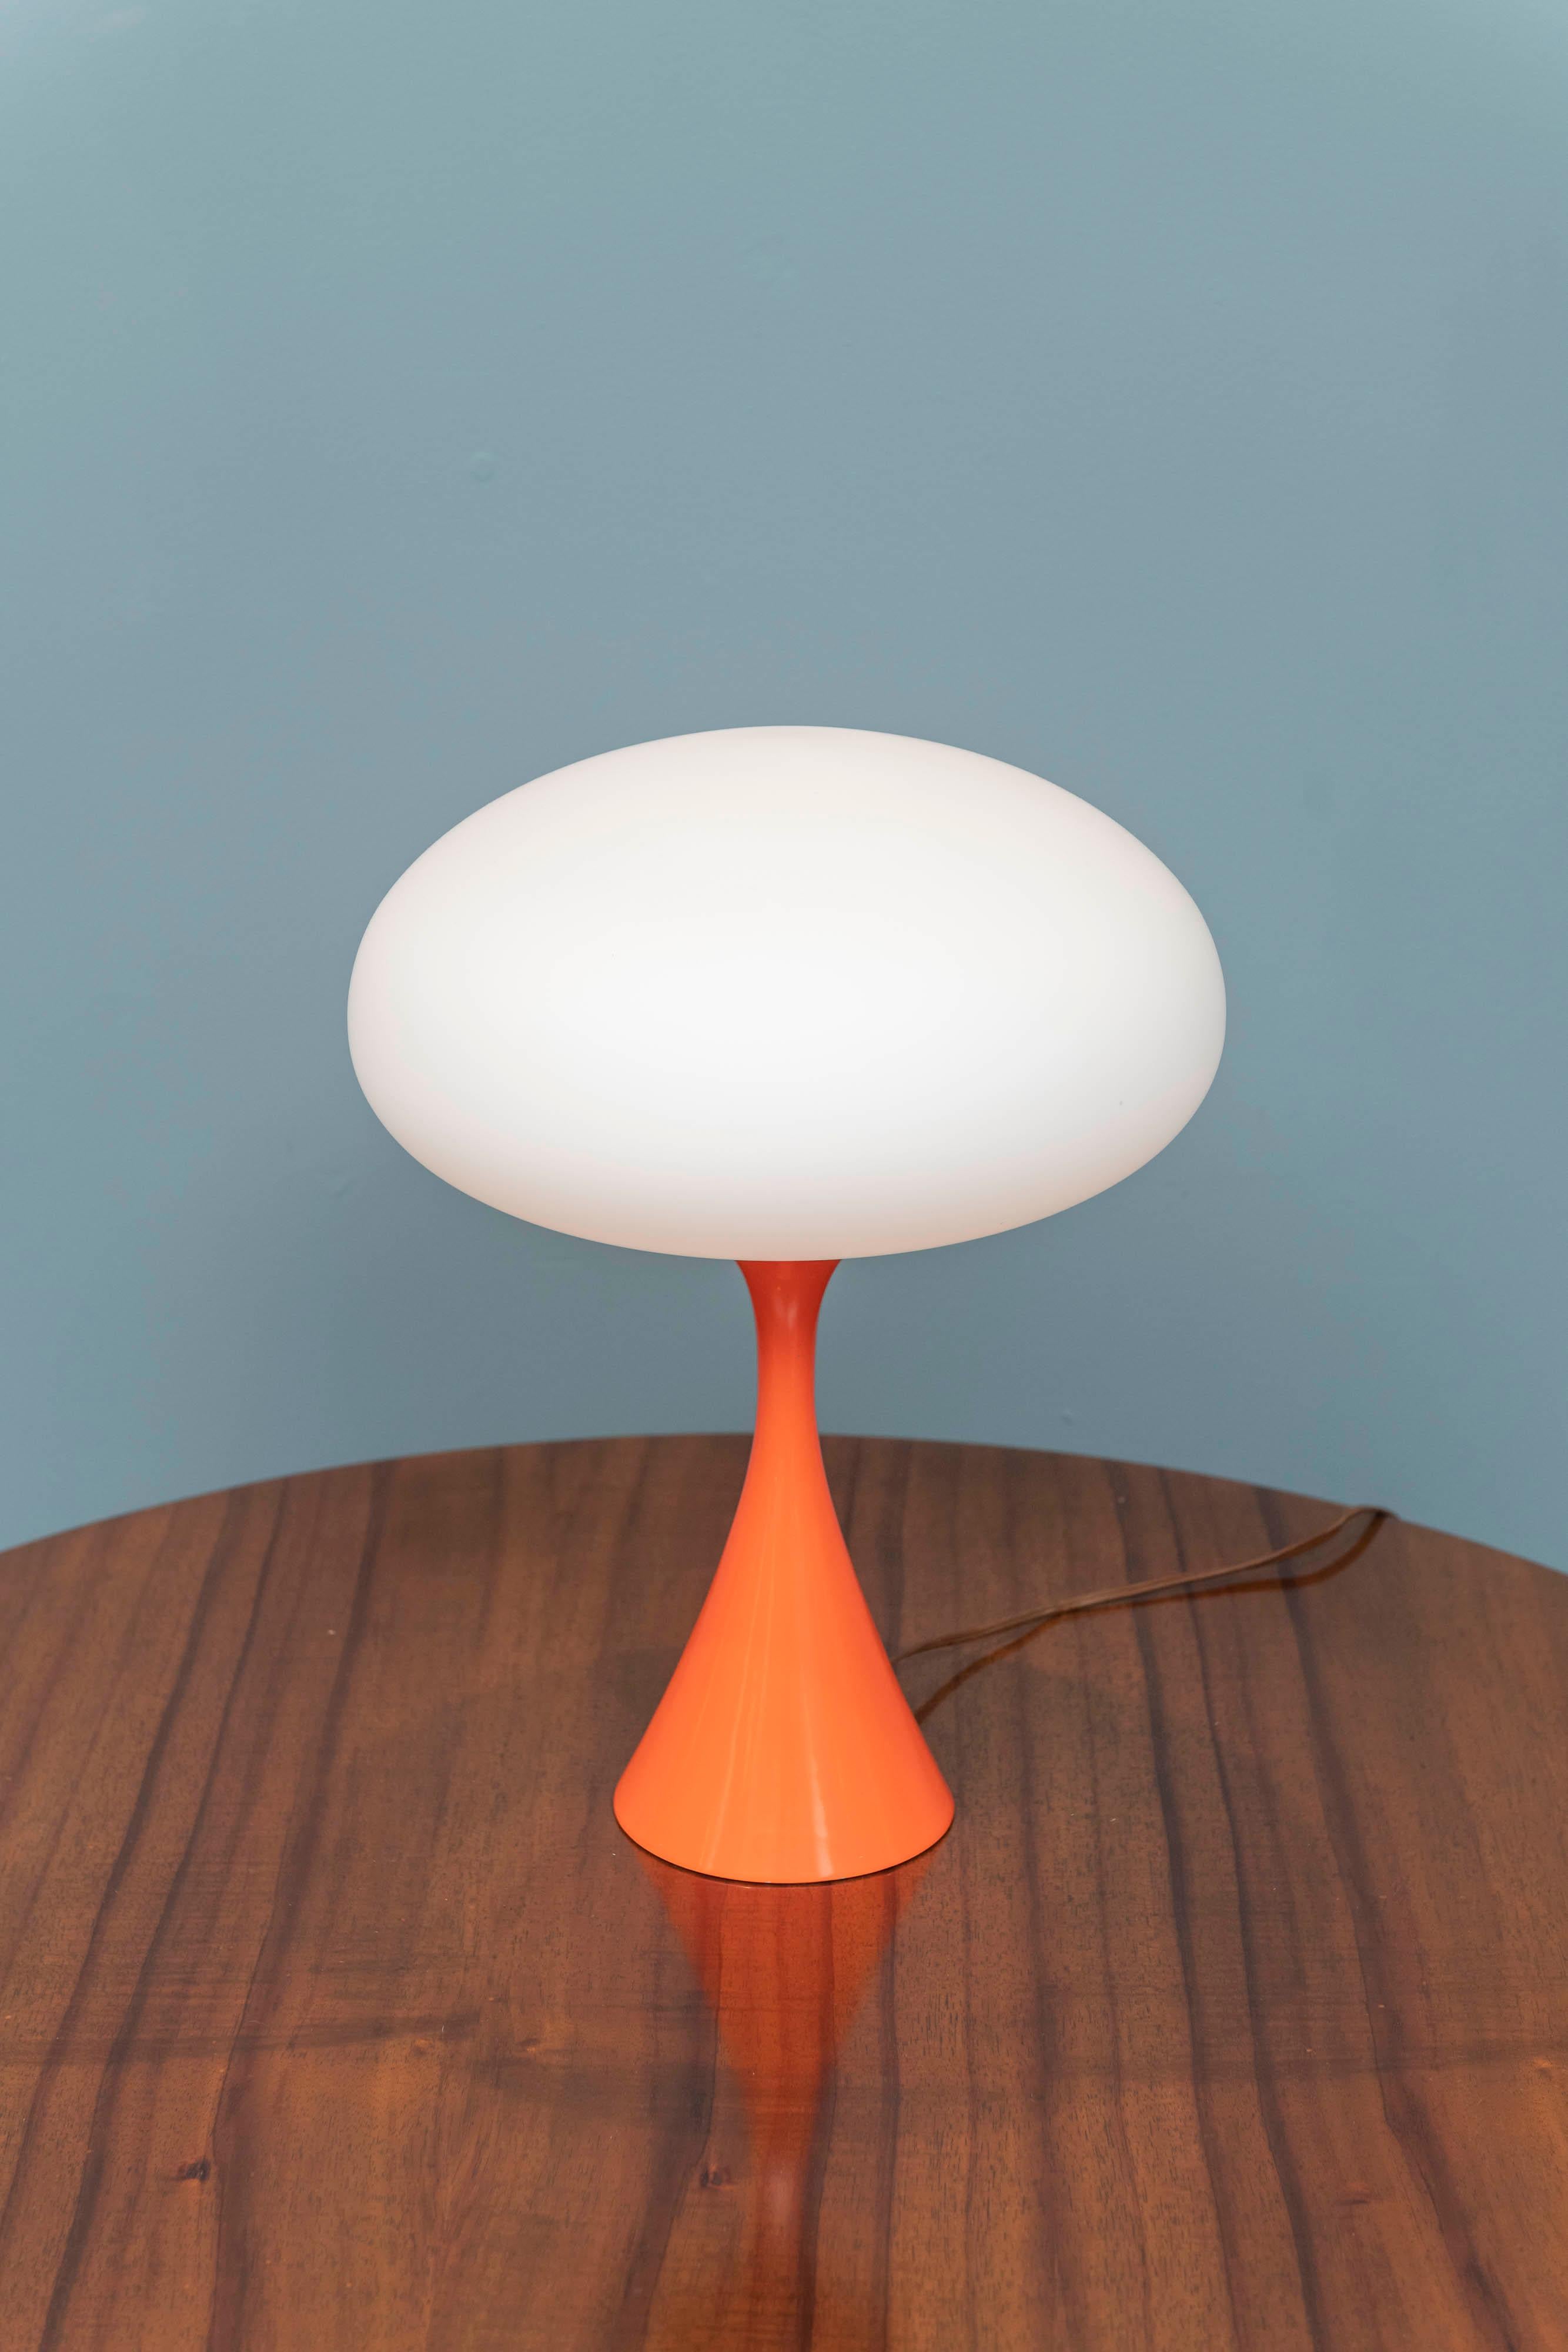 Mushroom form table lamp in a vibrant orange enamel by Laurel Lamp Co., USA.